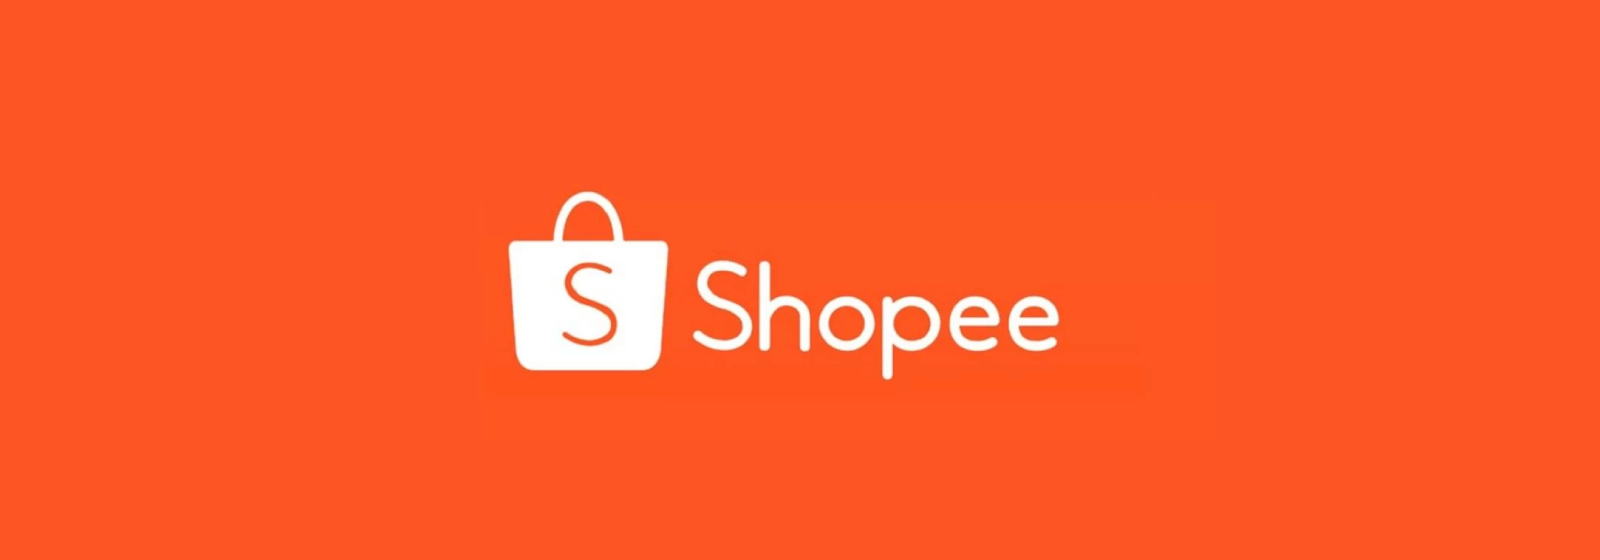 Shopee programa de afiliados: O que é?